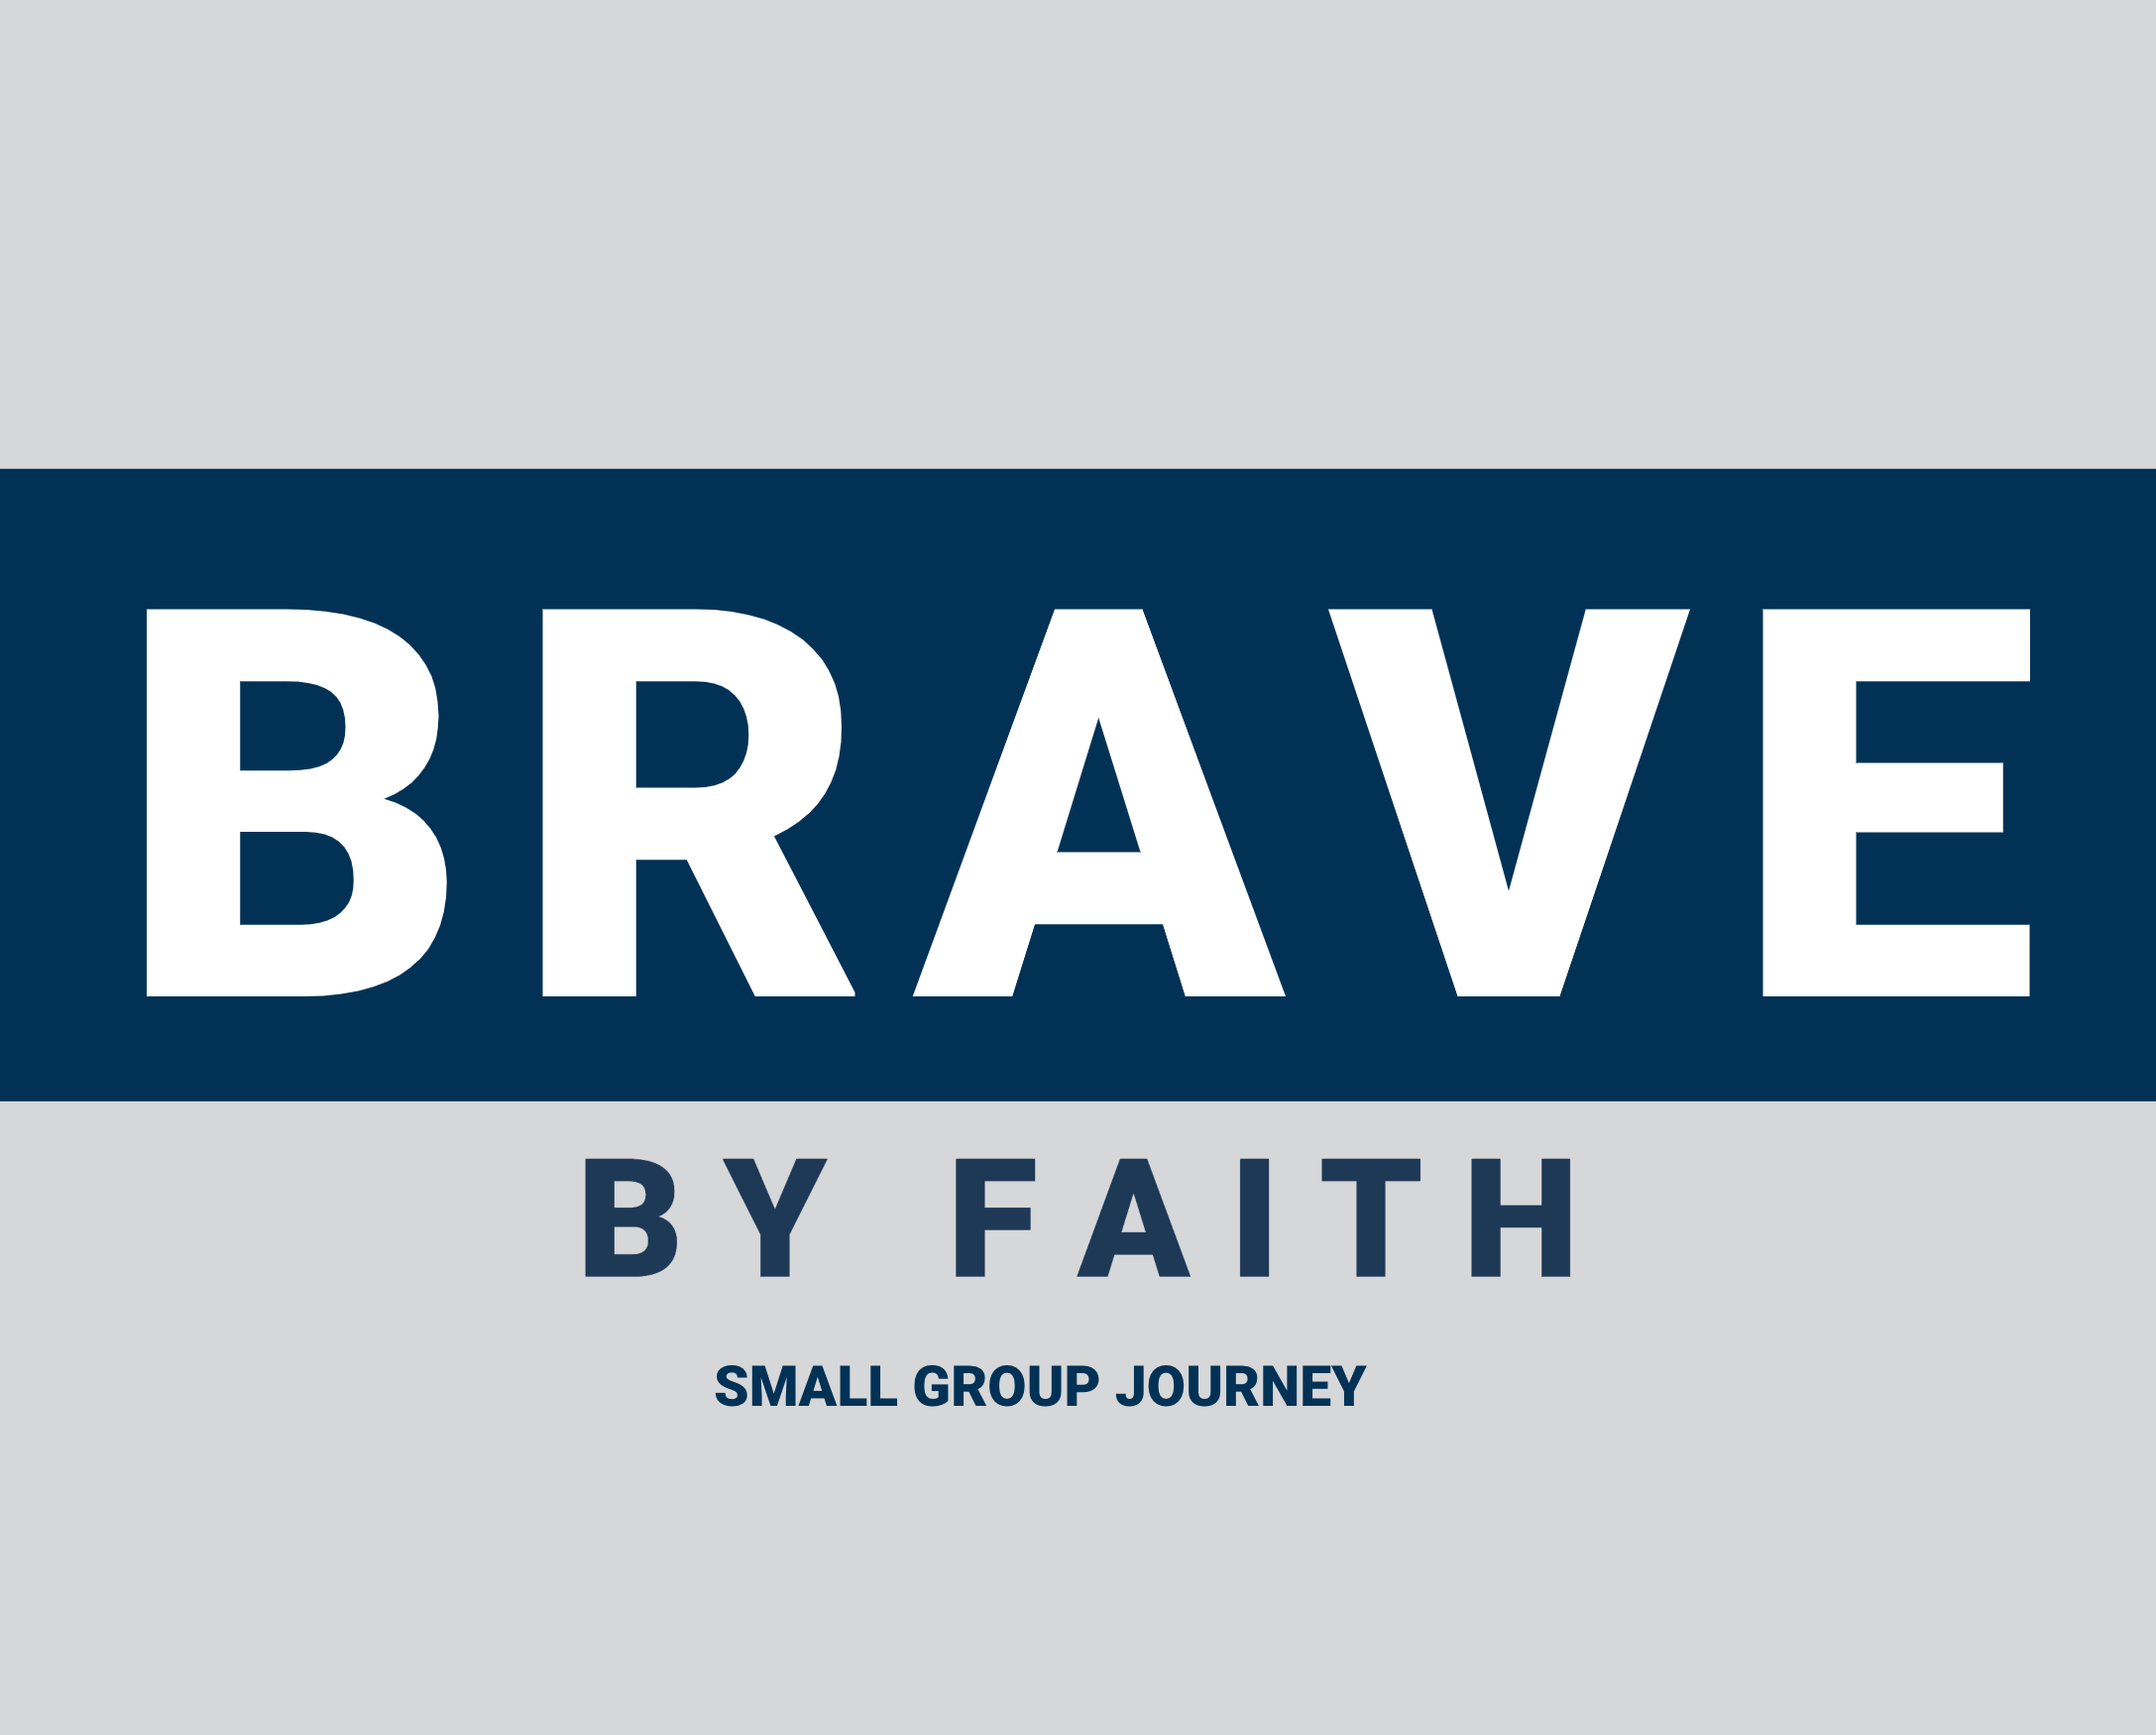 Brave by Faith: One Last Hurdle